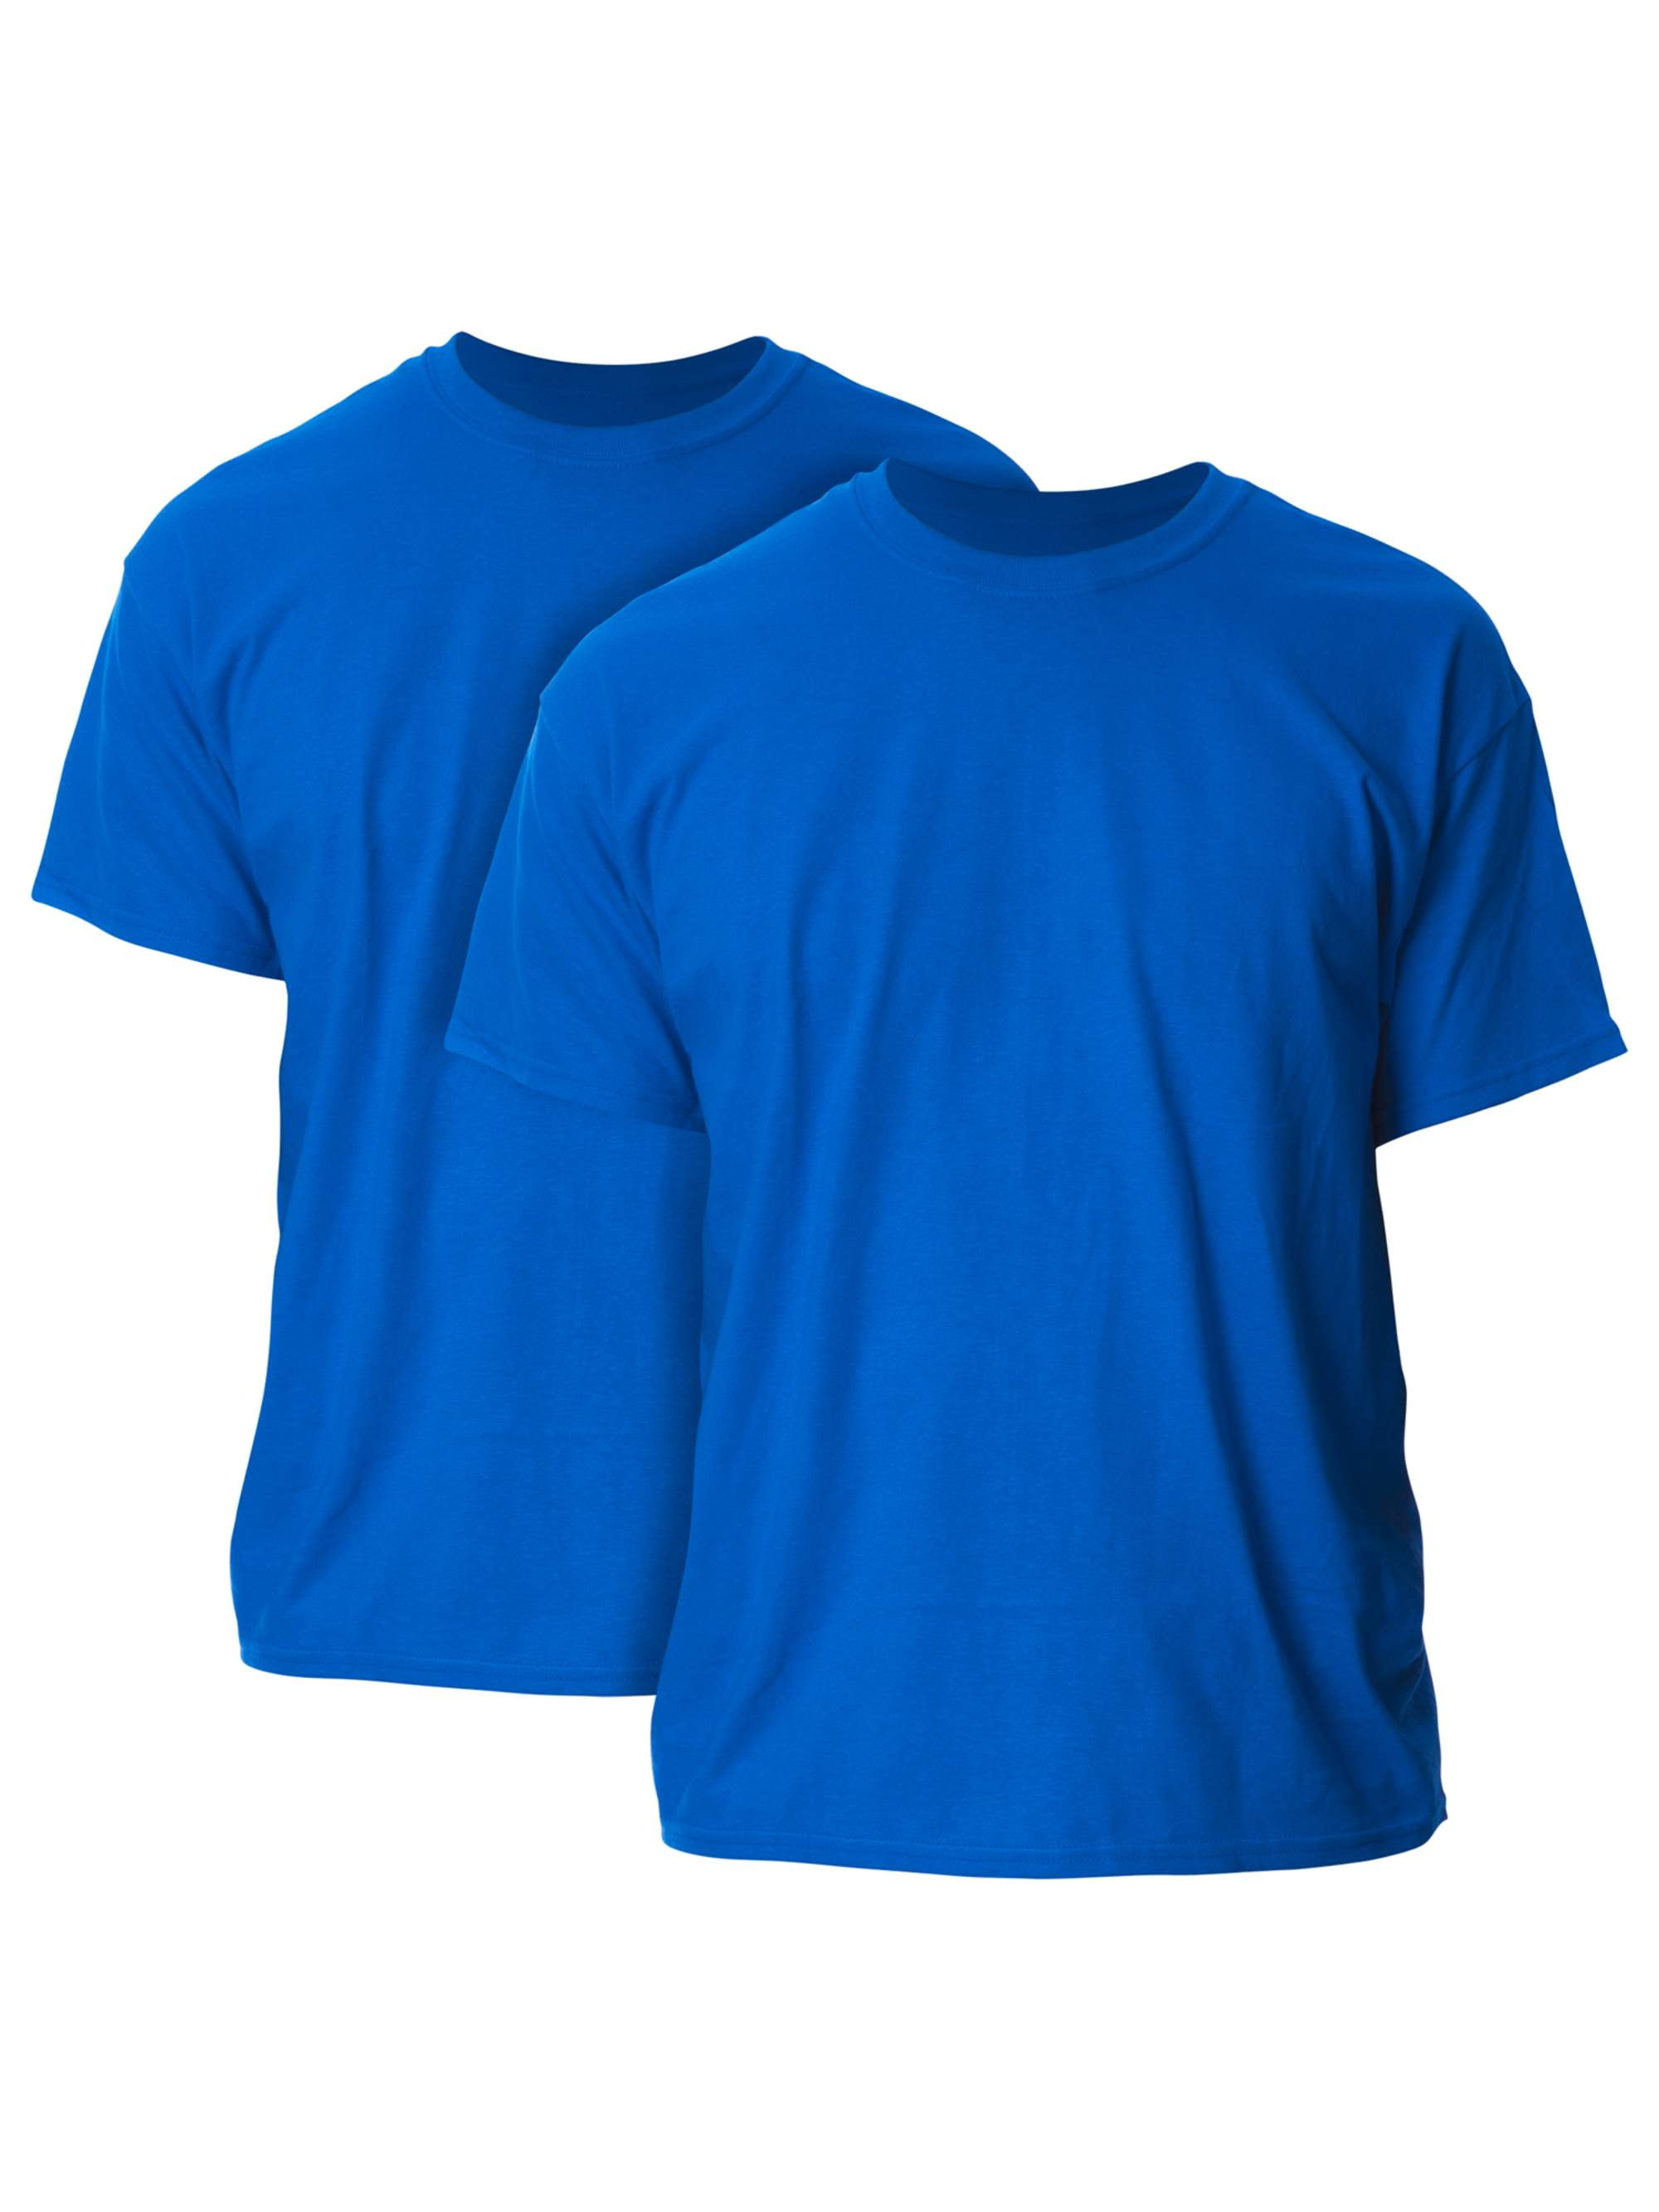 L size shirt S size shirt Dog Style T- shirt XL size shirt M size shirt XXL size shirt T-Shirt for Men